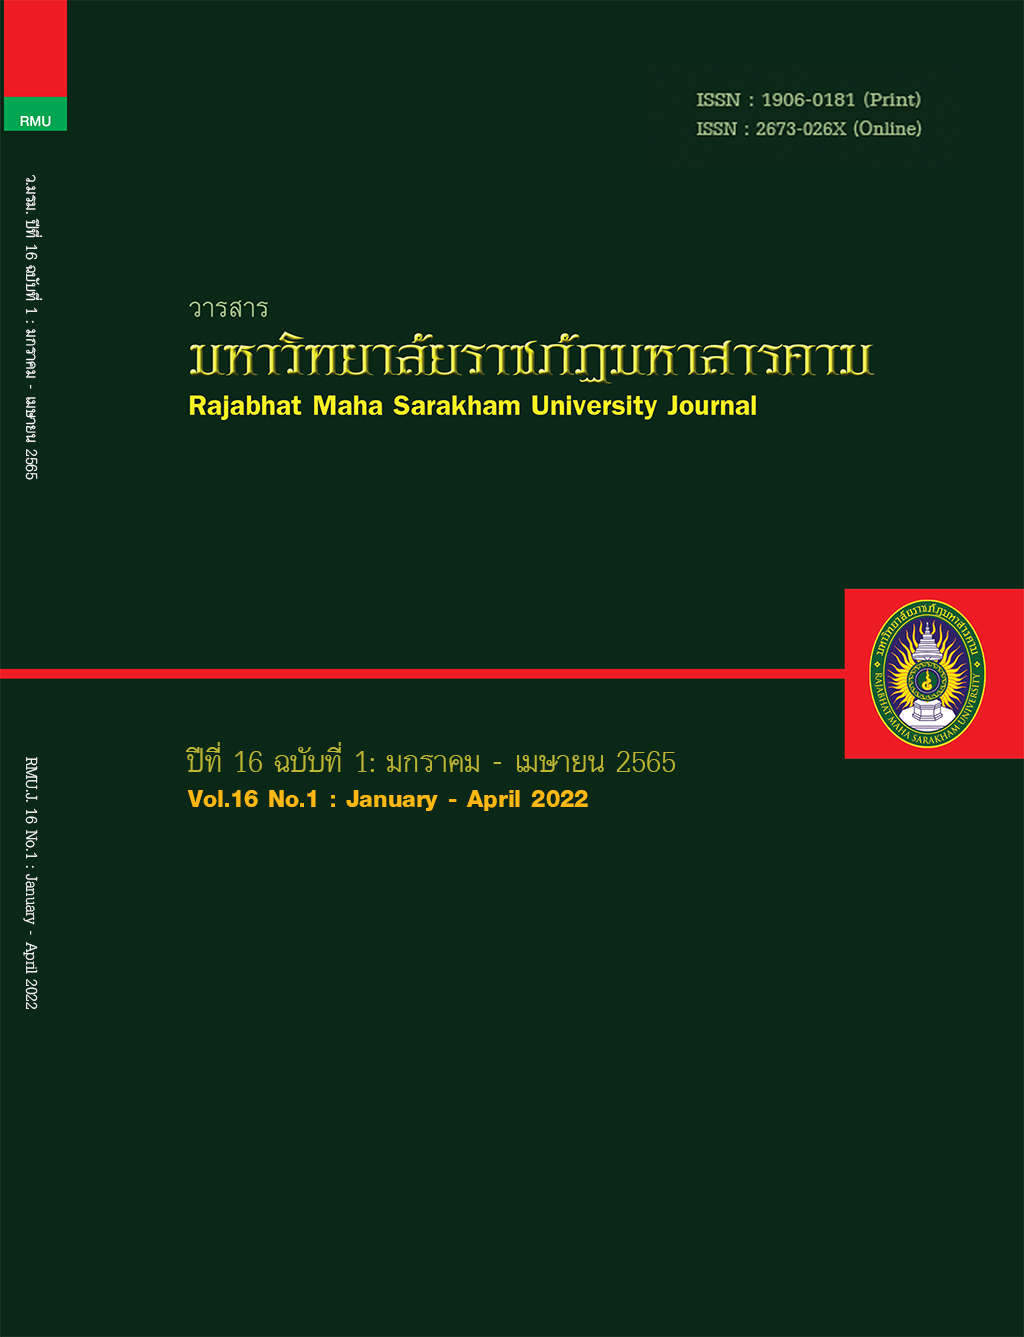 Rajabhat Maha Sarakham University Journal Vol.16 No.1 